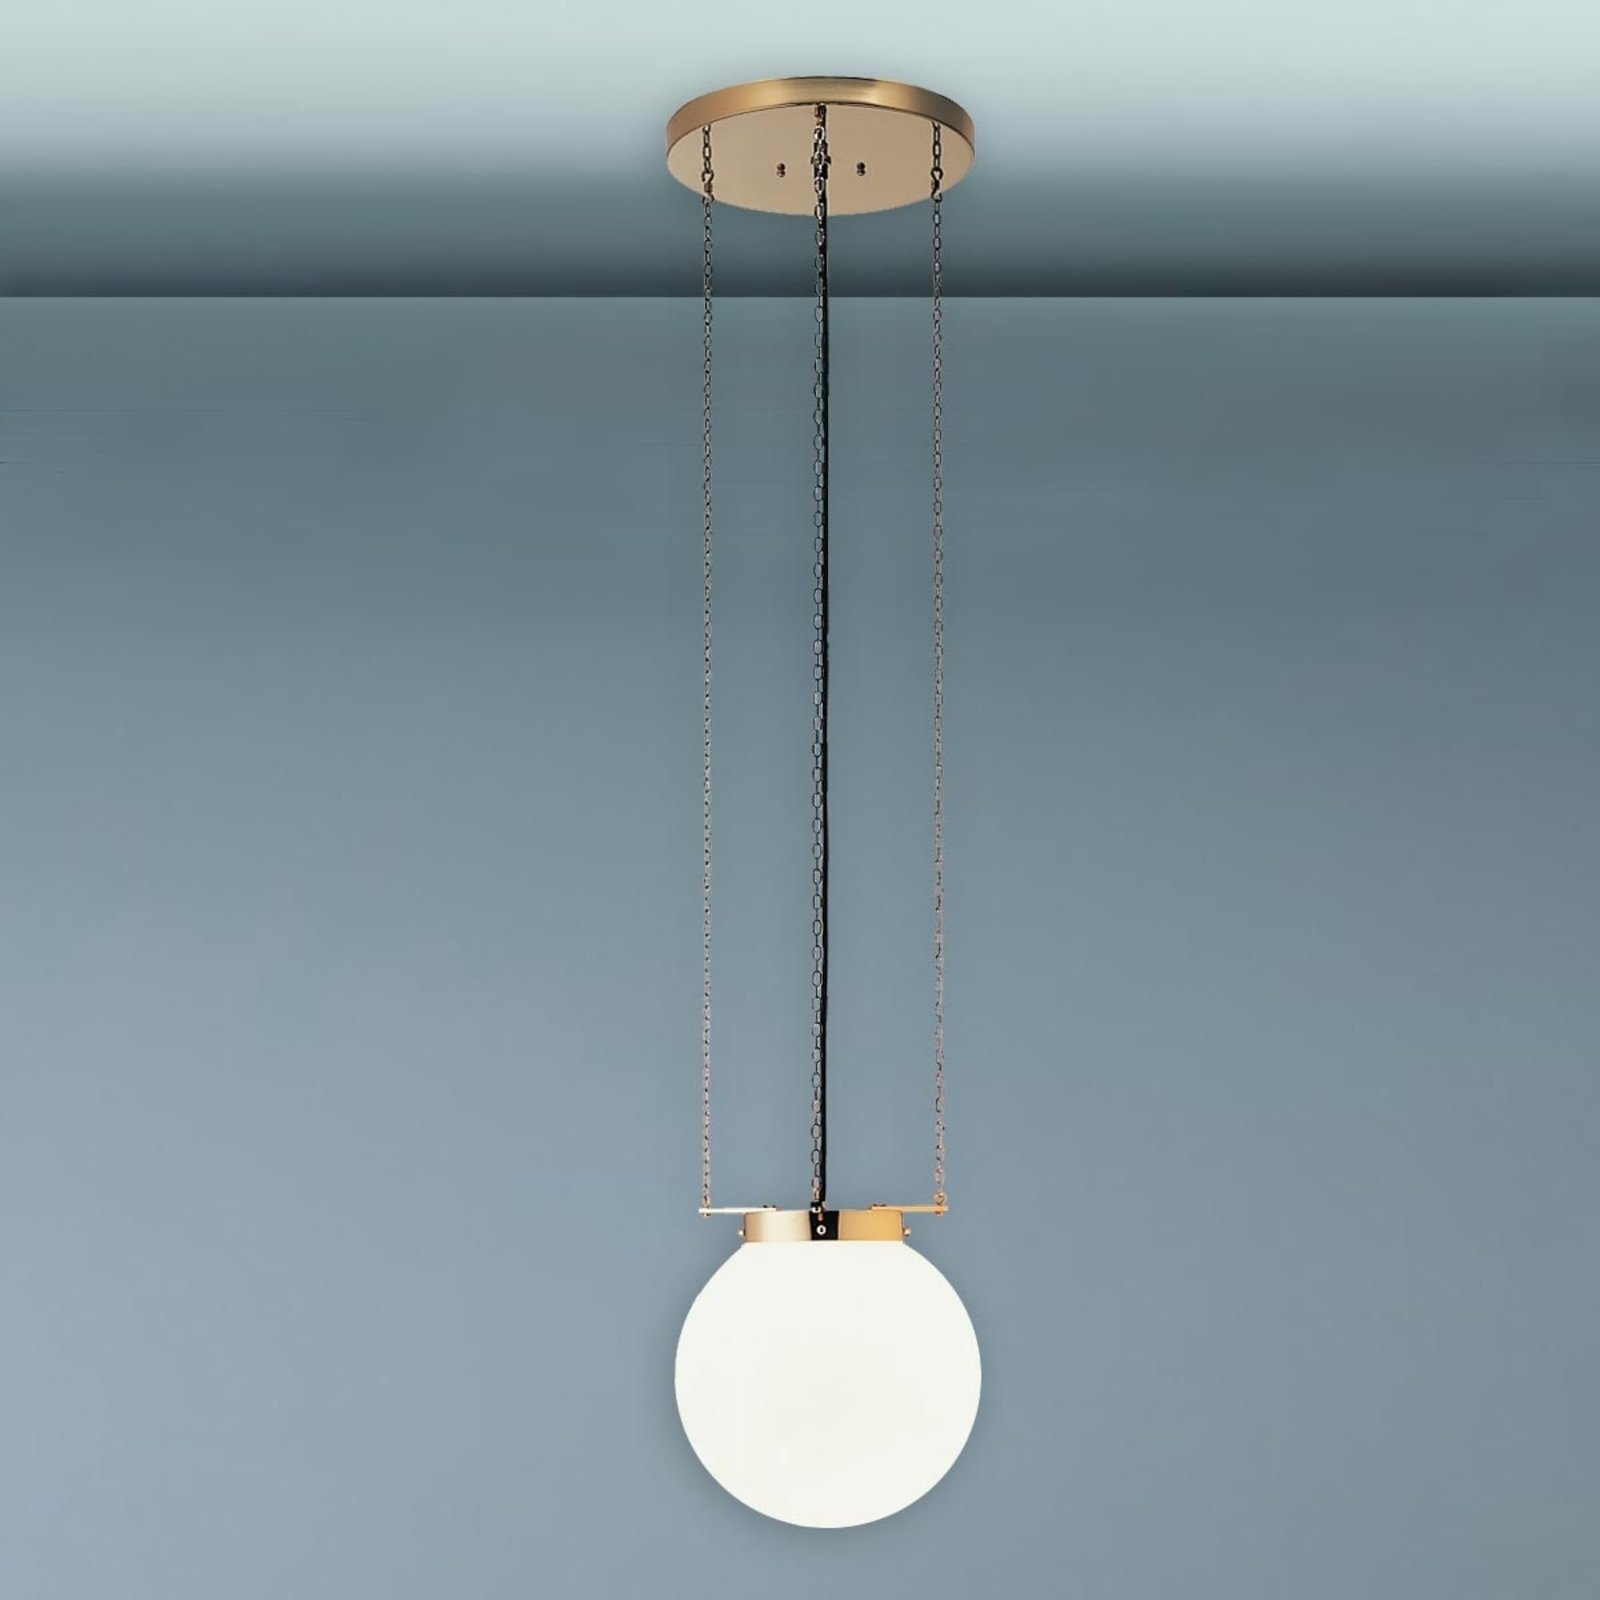 Hanging light in the Bauhaus style, brass, 25 cm